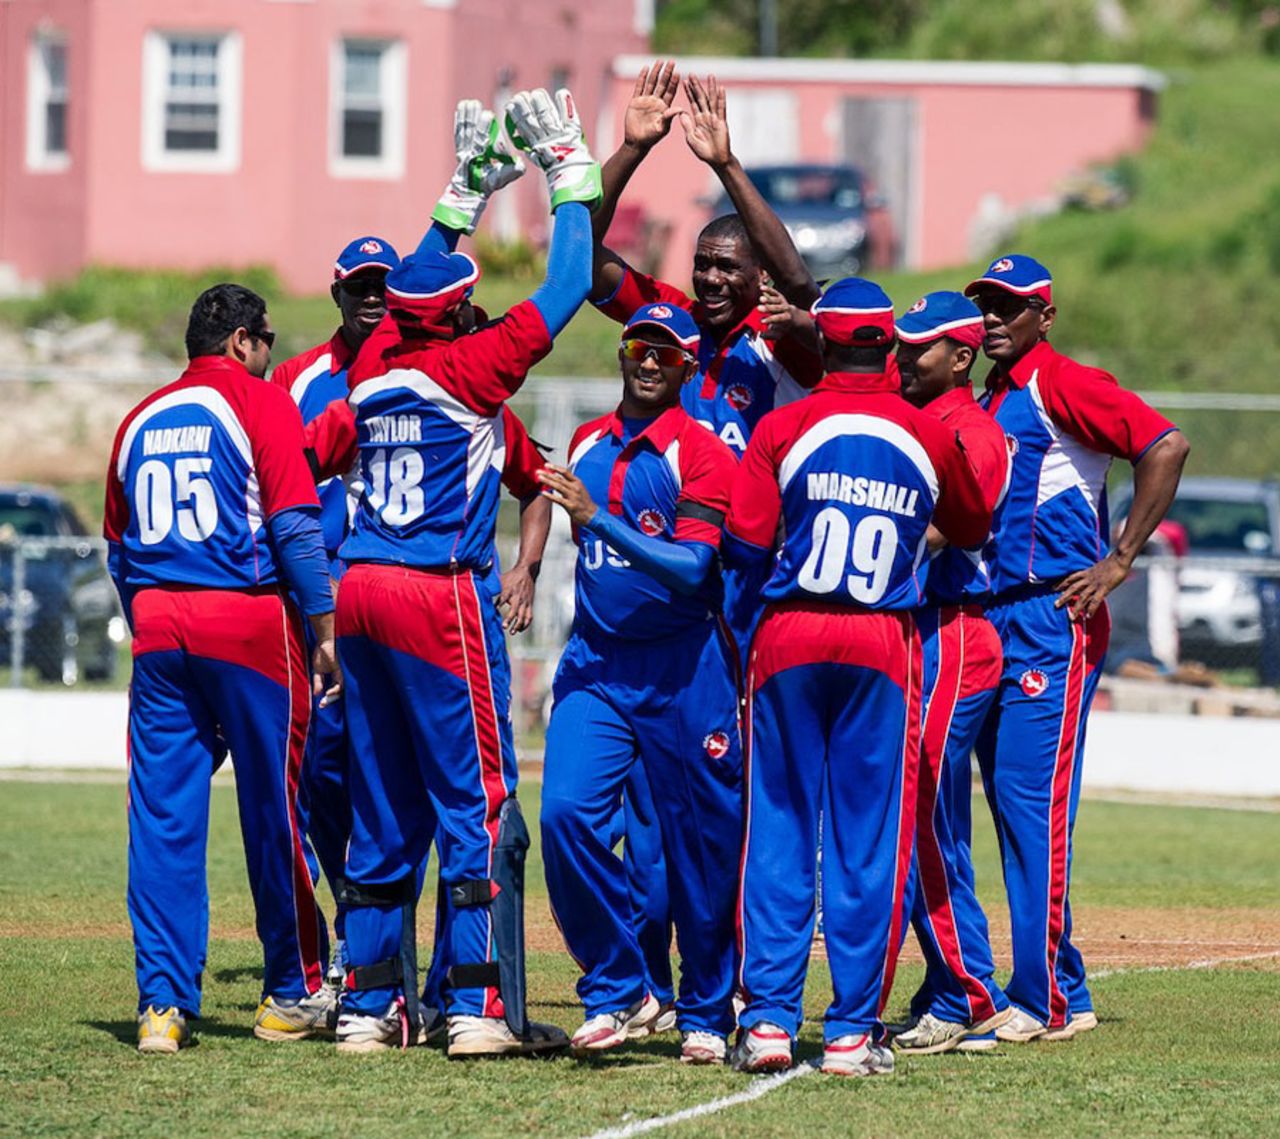 The USA team celebrate a wicket, Nepal v USA, ICC World Cricket League Division Three, Somerset, Bermuda, April 28, 2013